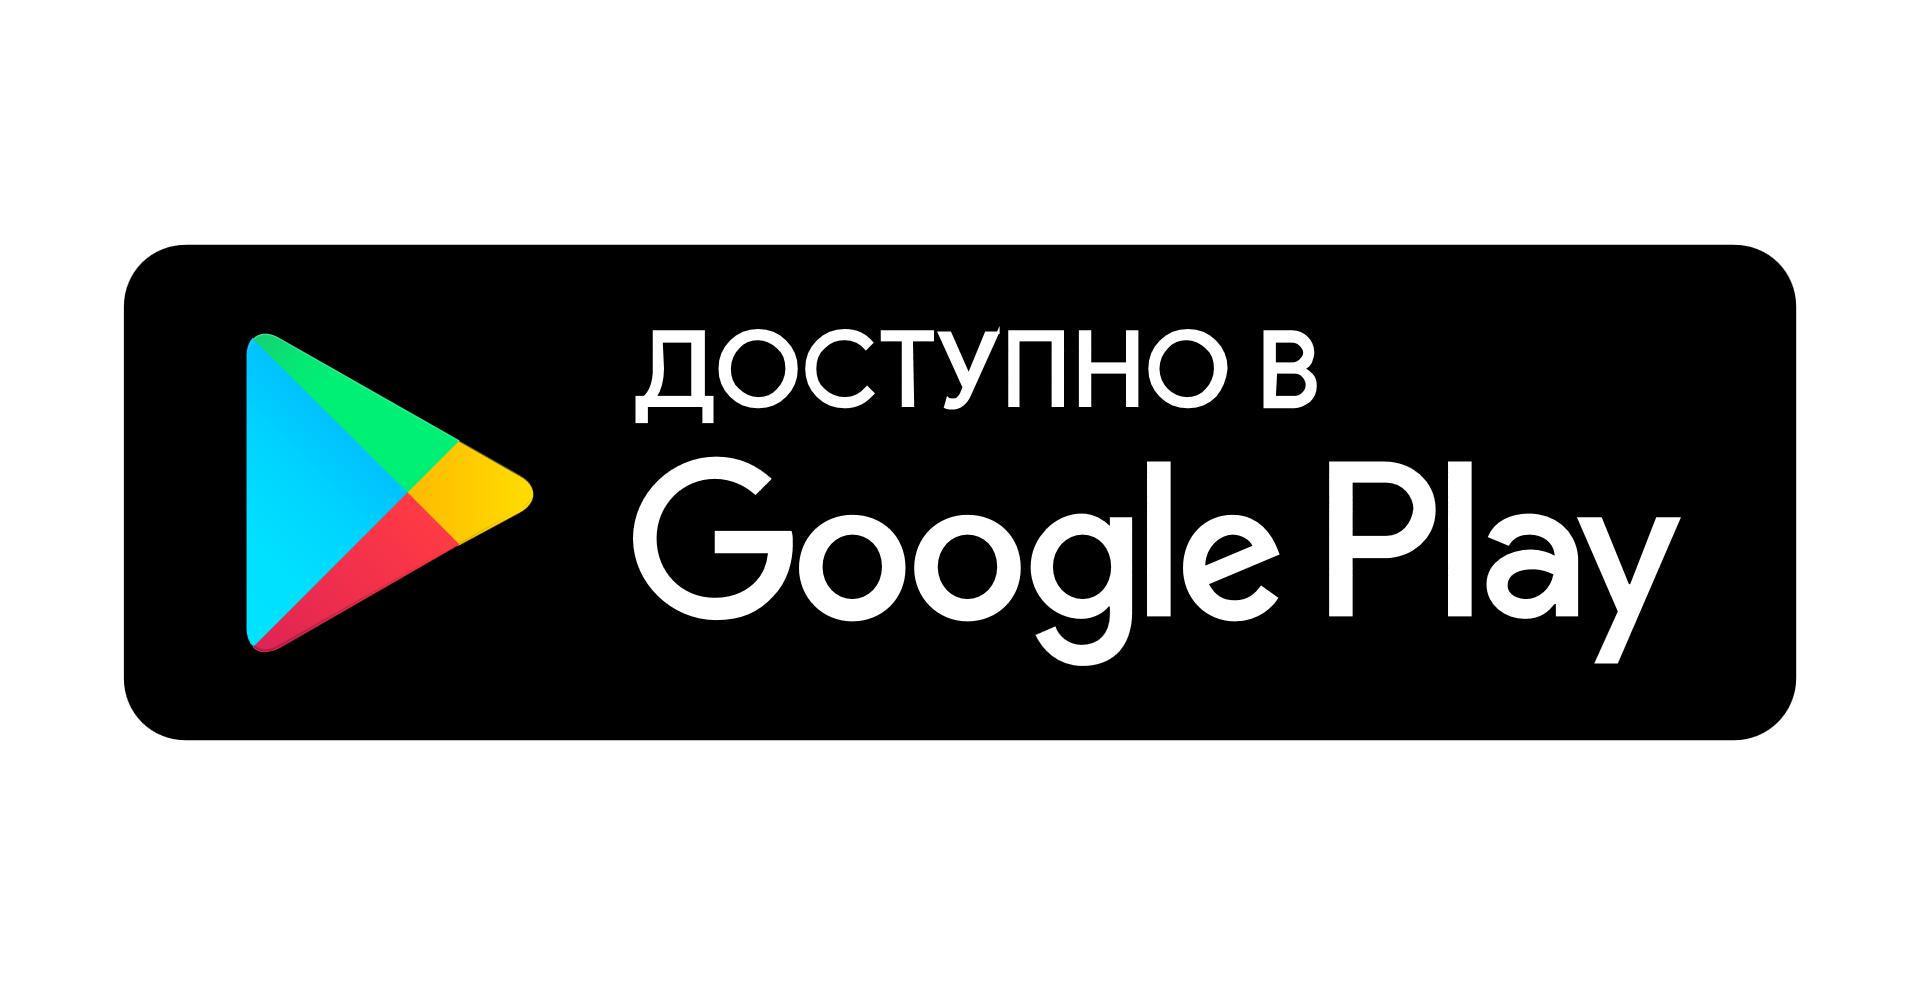 Google play компания. Гугл плей. Логотип Google Play. Доступно в гугл плей. Доступно в гугл плей иконка.